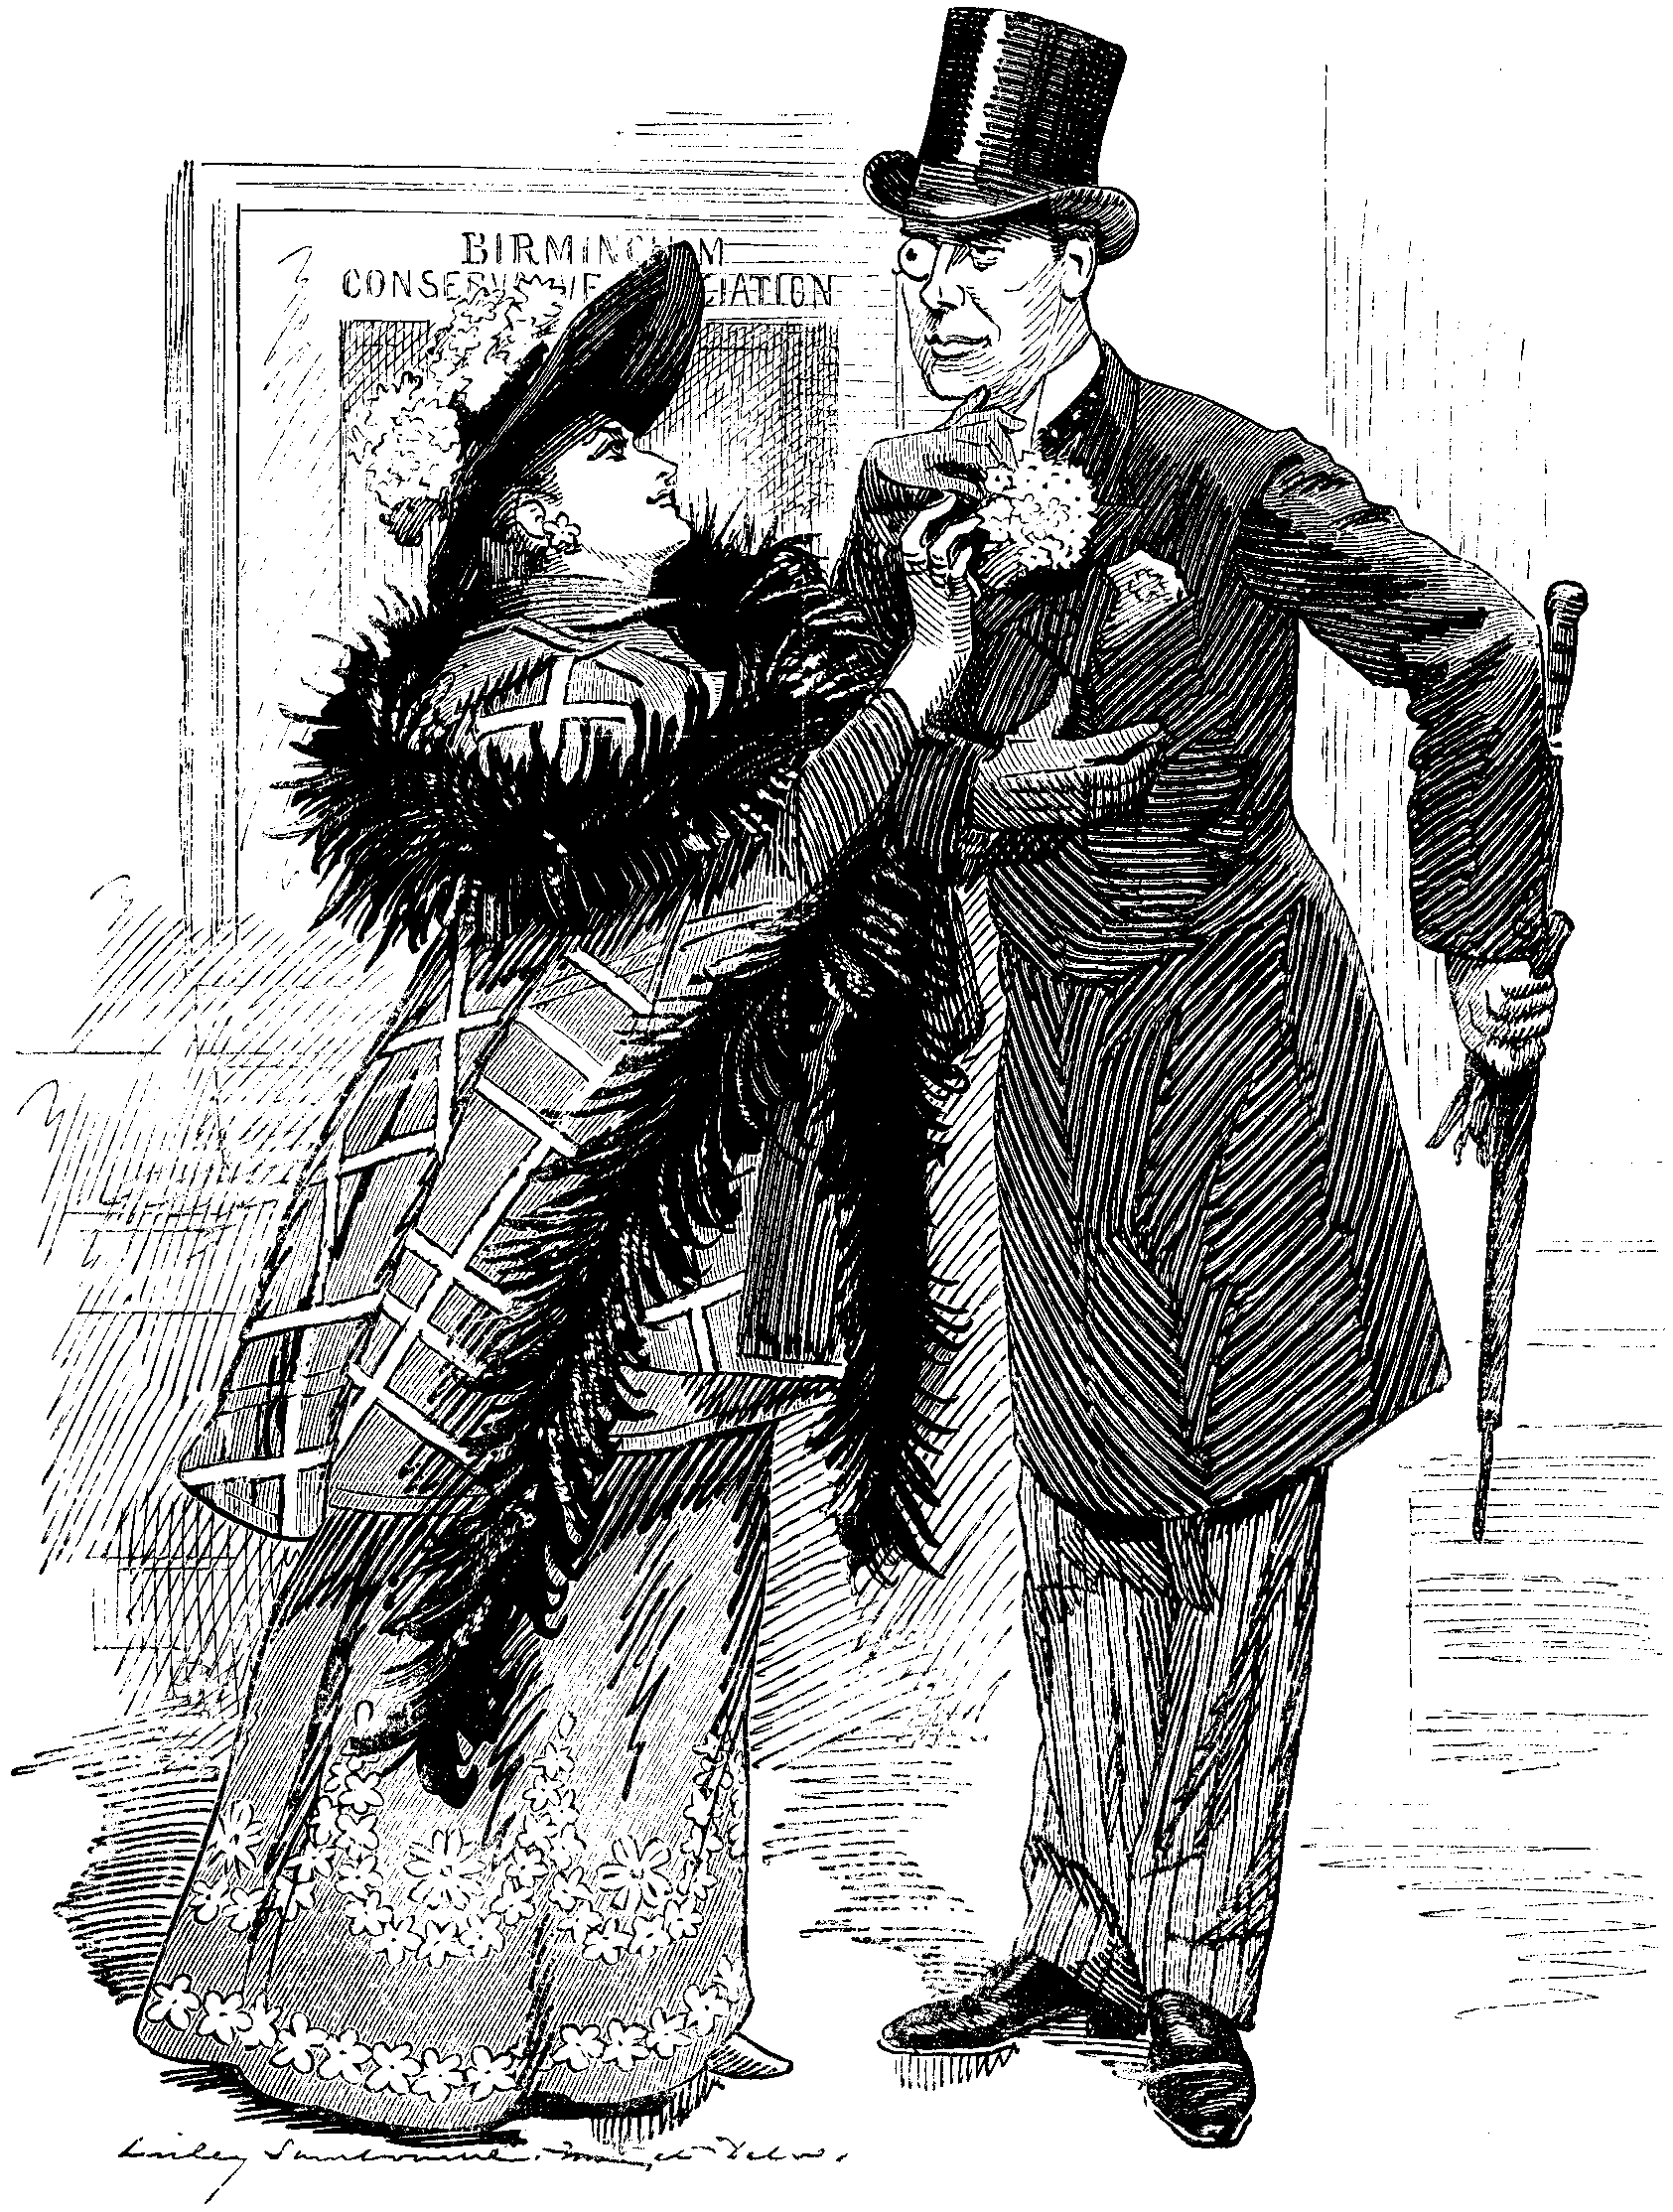 Punch, December 5, 1891. photo